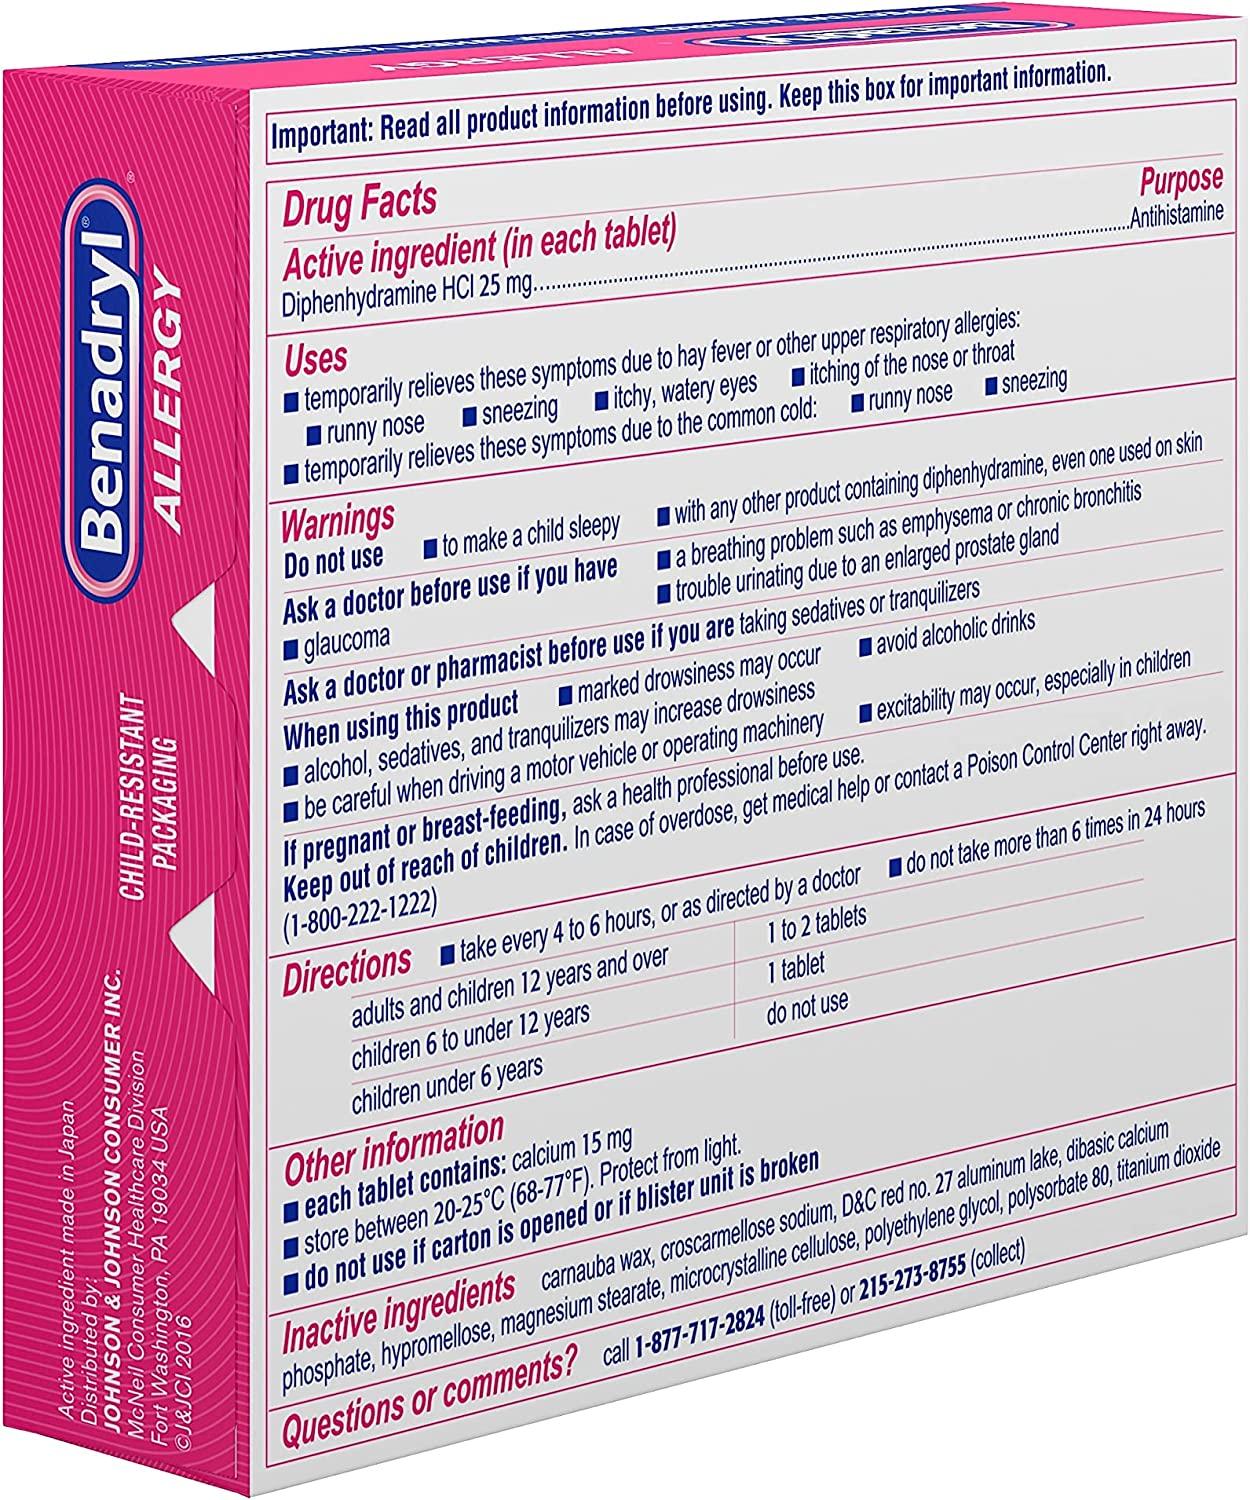 Benadryl Ultratabs Antihistamine Allergy Medicine, Diphenhydramine HCl  Tablets, 48 ct 48 Count (Pack of 1)